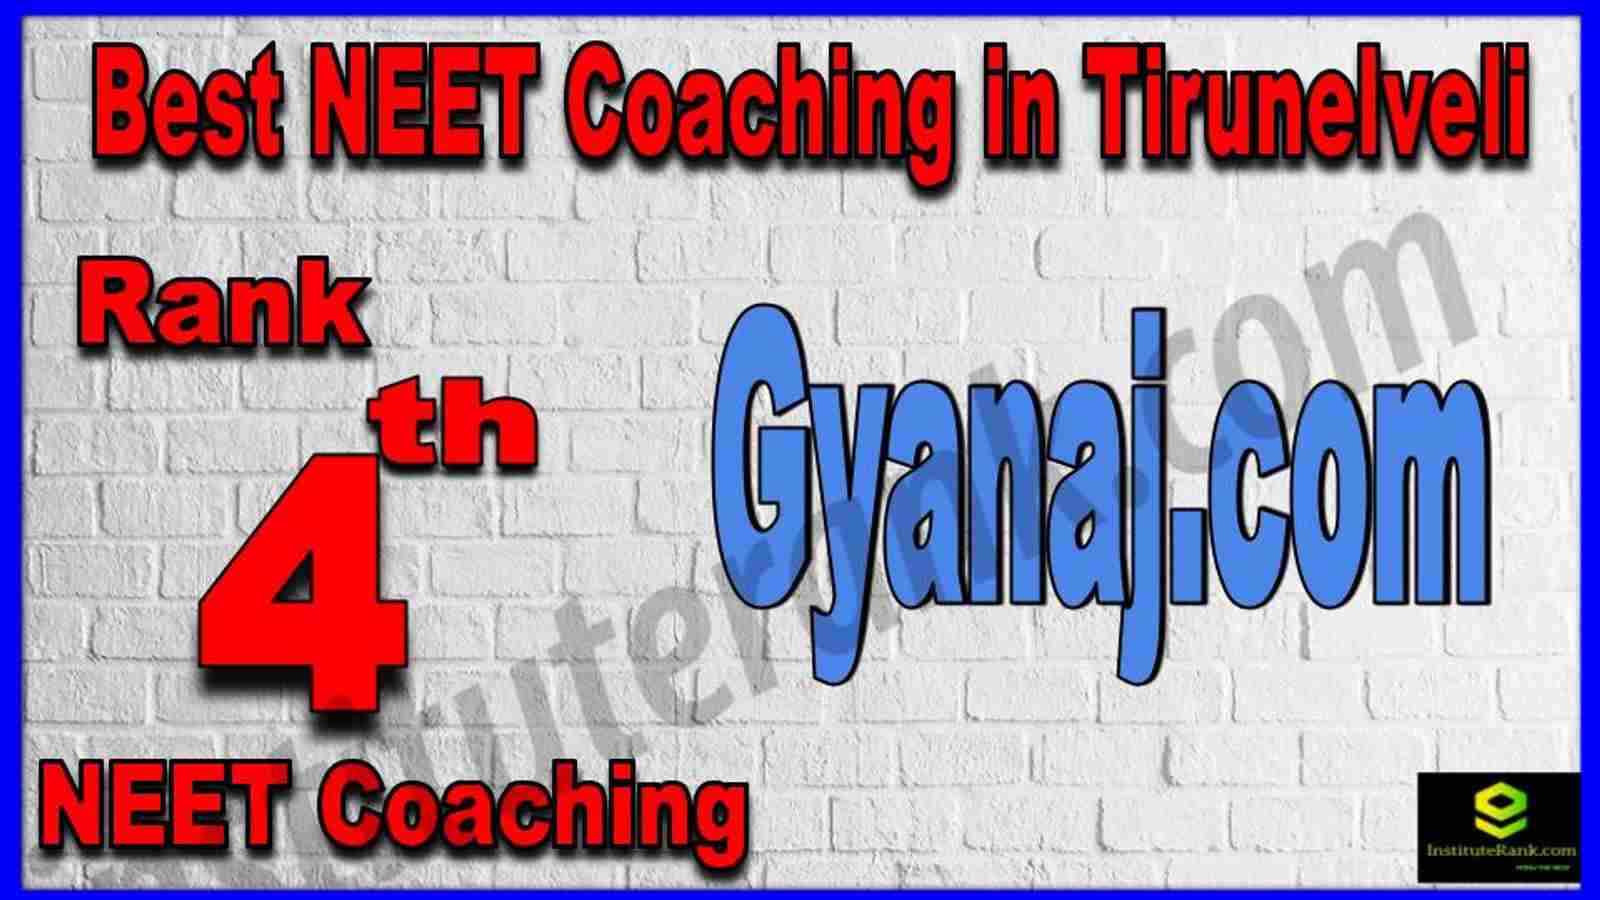 Rank 4th Best NEET Coaching in Tirunelveli